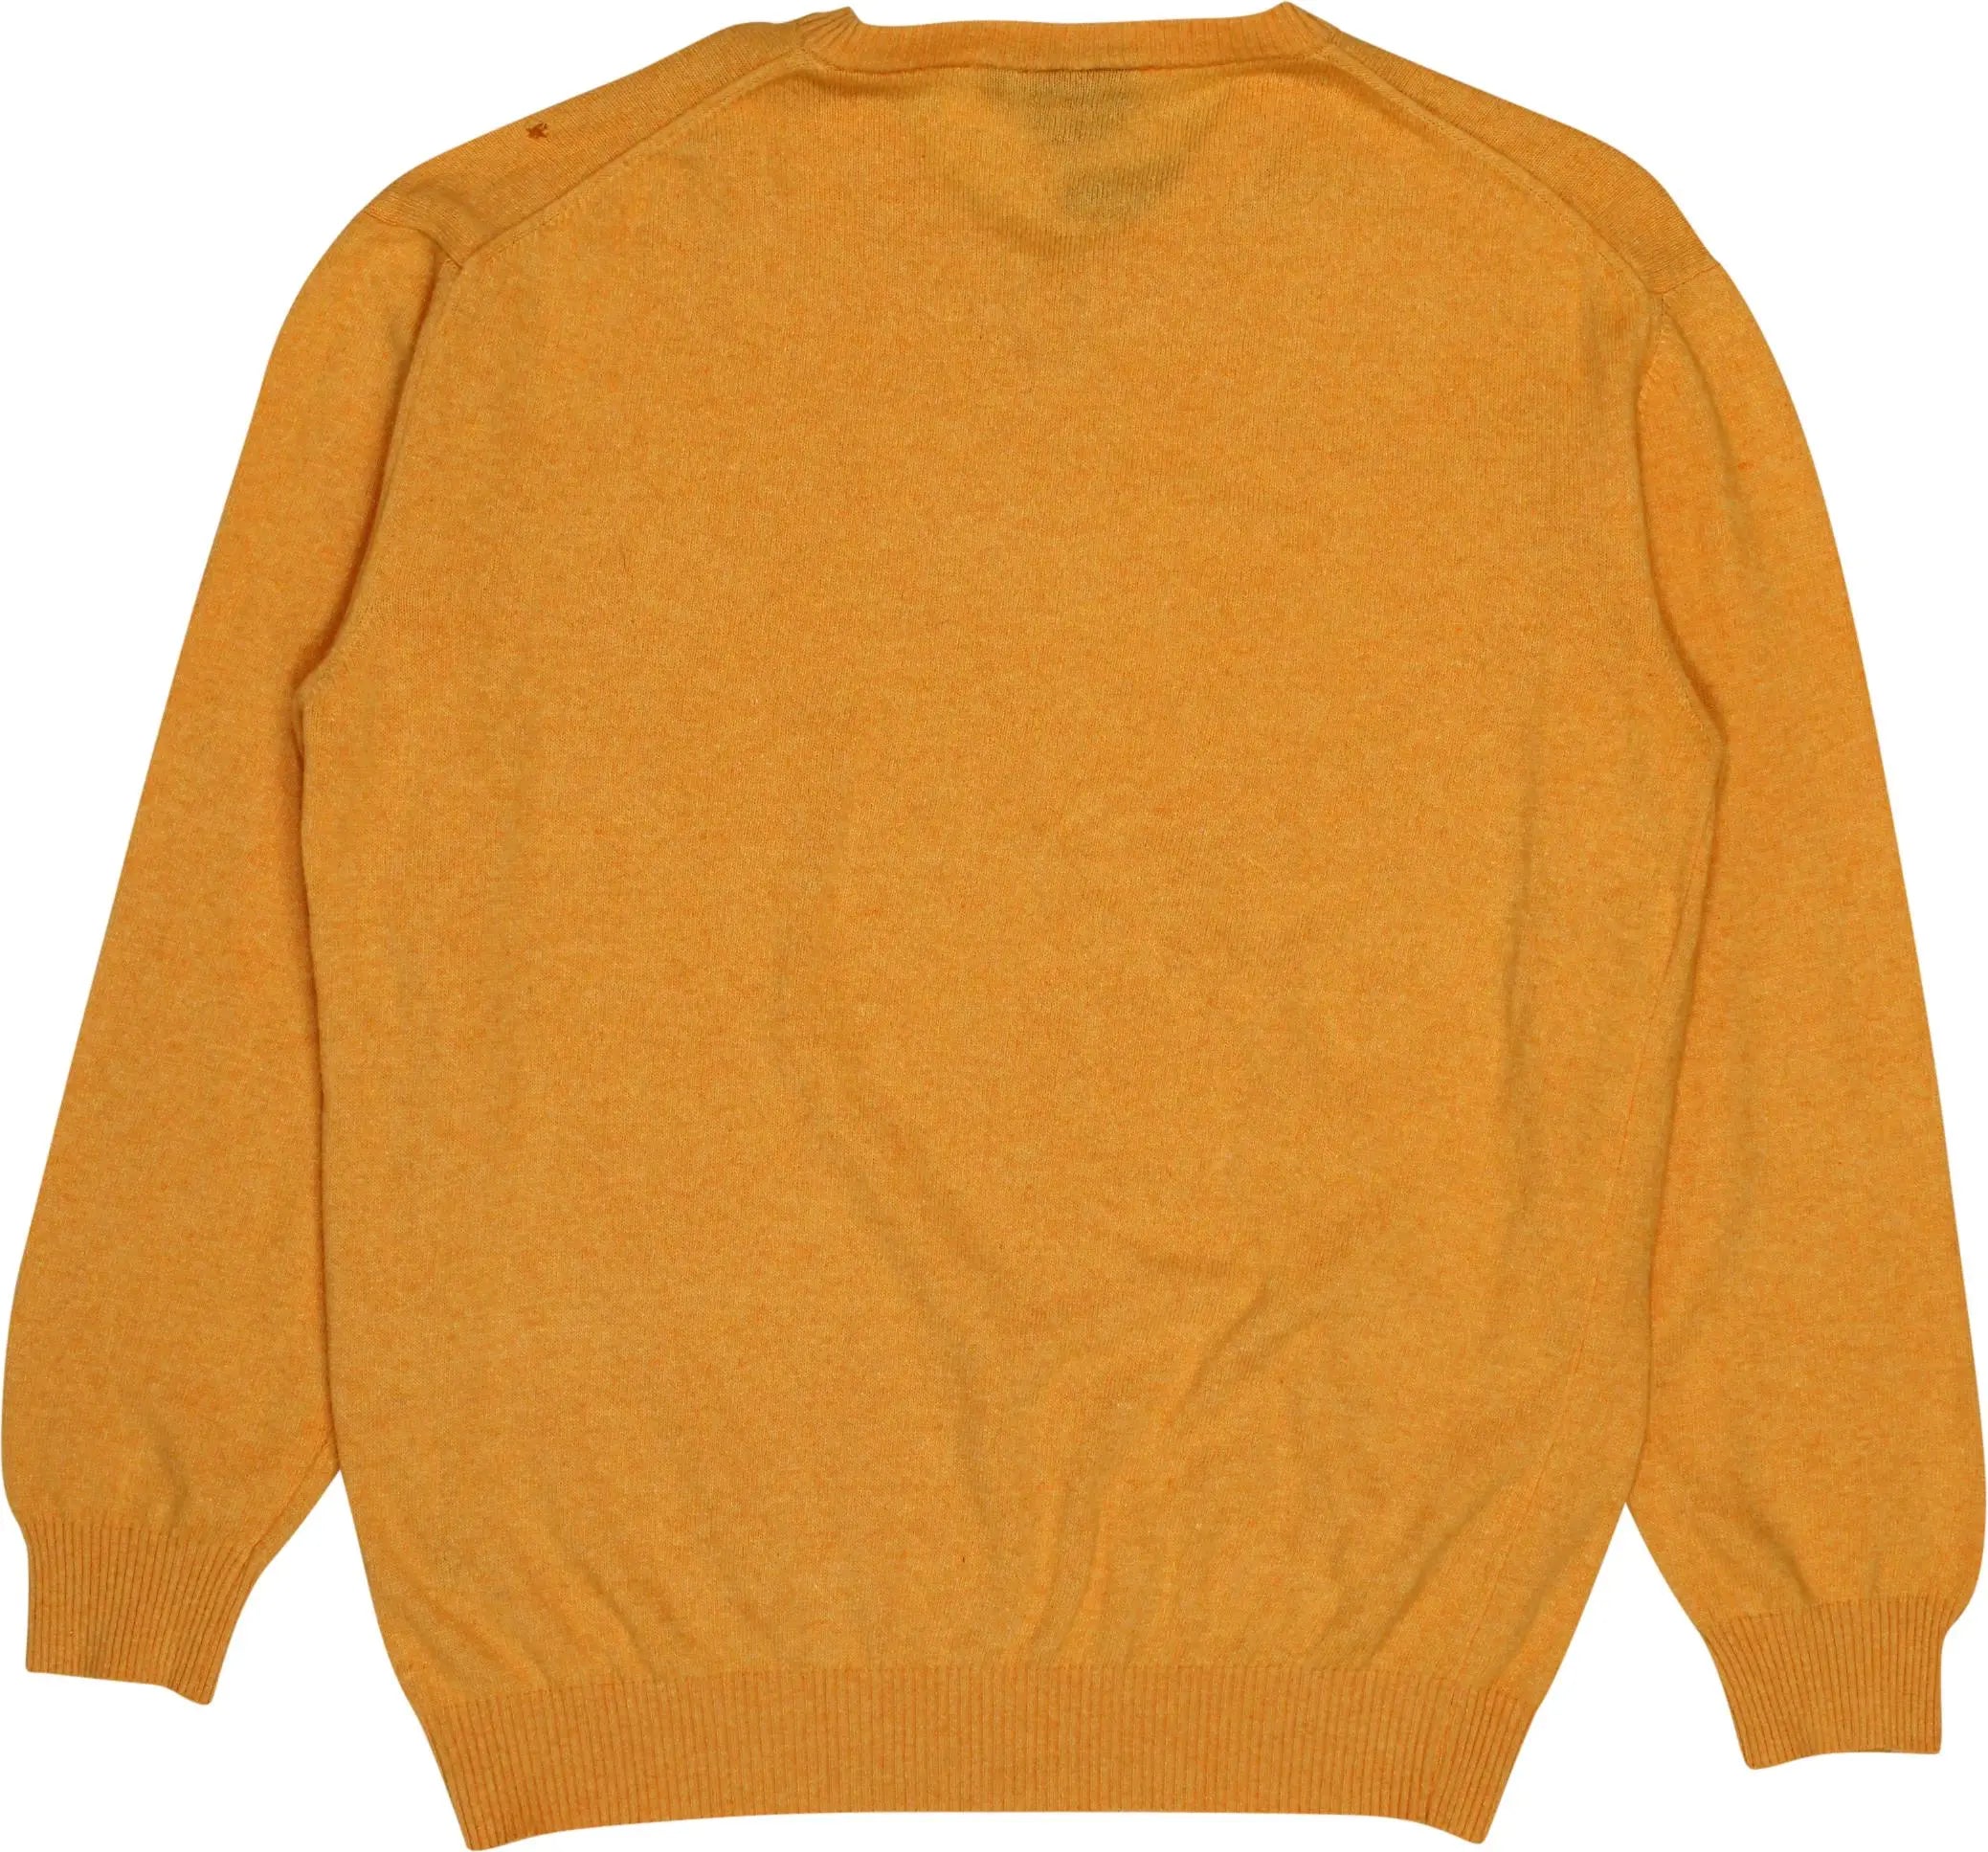 C&A - Orange Plain Jumper- ThriftTale.com - Vintage and second handclothing